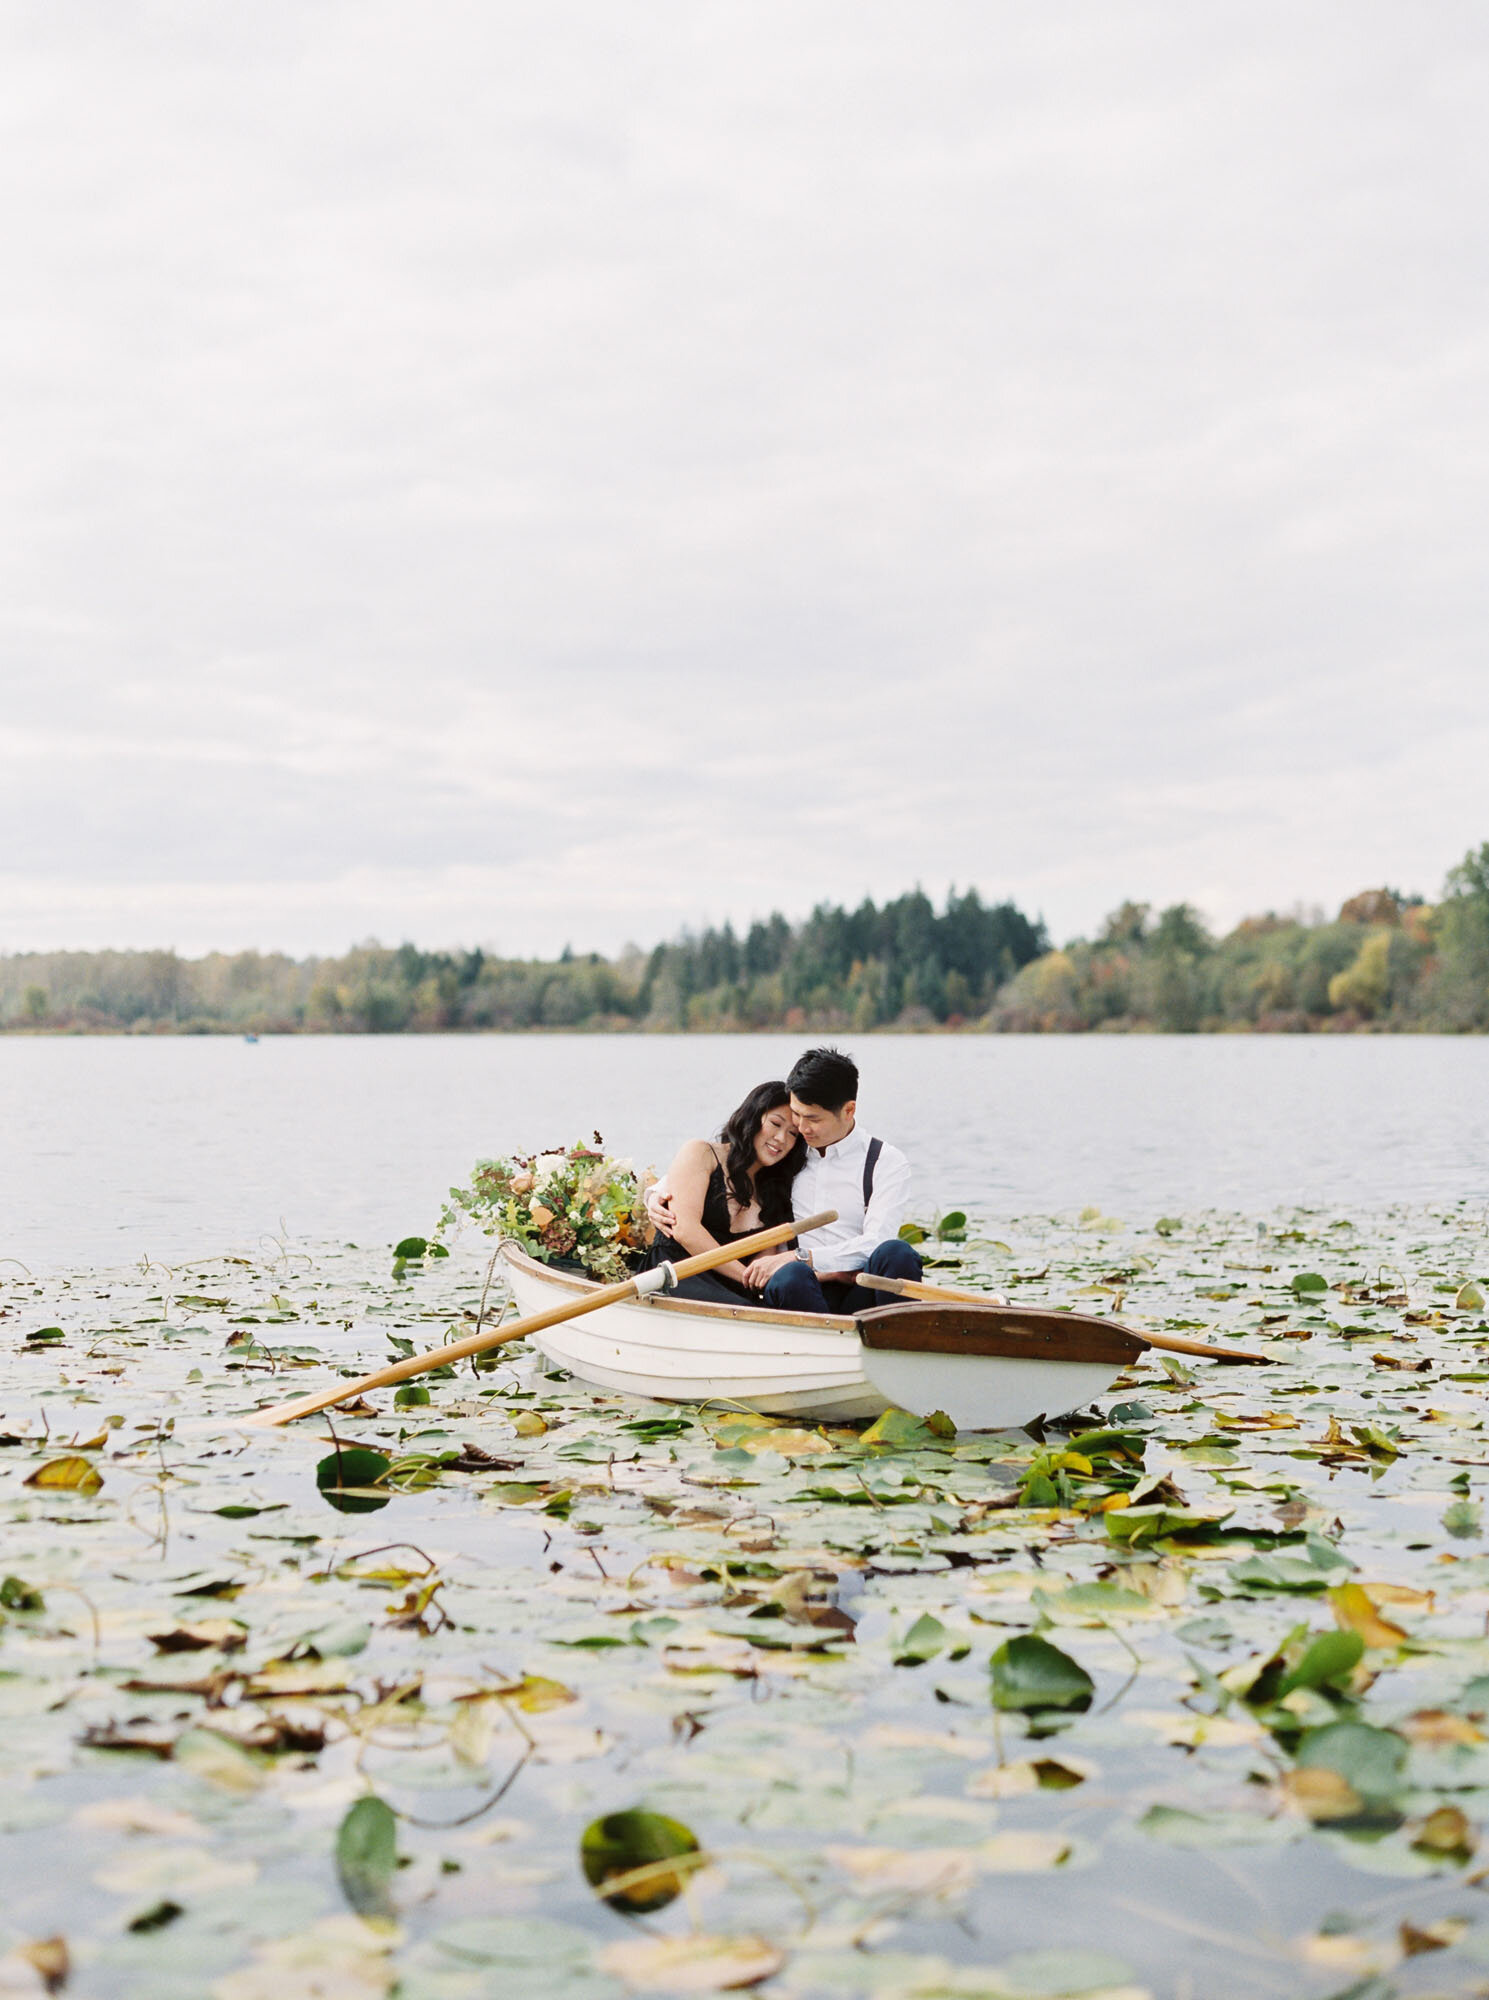 DeerLake+Boat+Engagement+Saminphotography+40.jpg